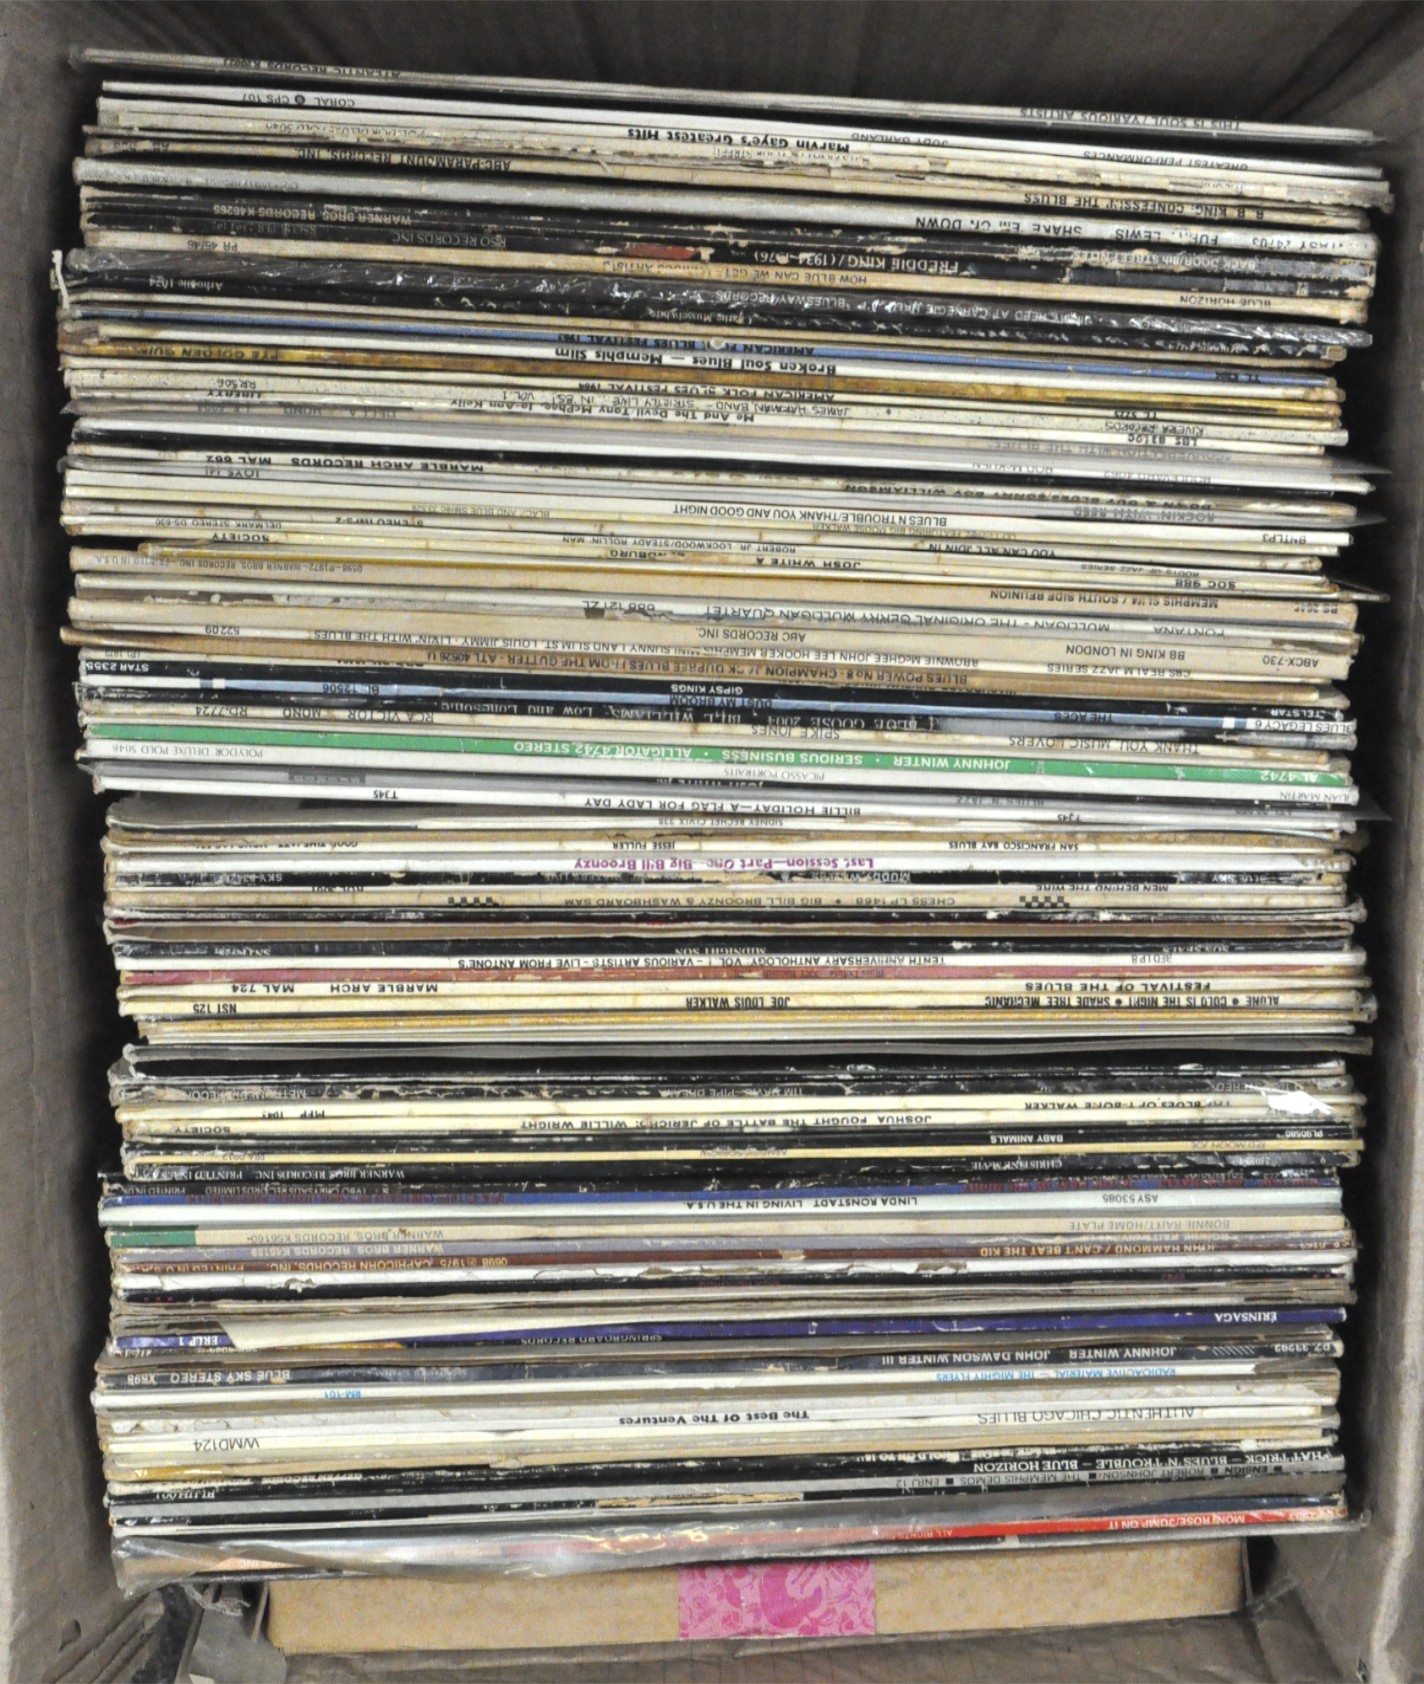 A box of vinyl records, including assorted Blues albums, Billie Holiday, Robert Johnson, Otis Rush,